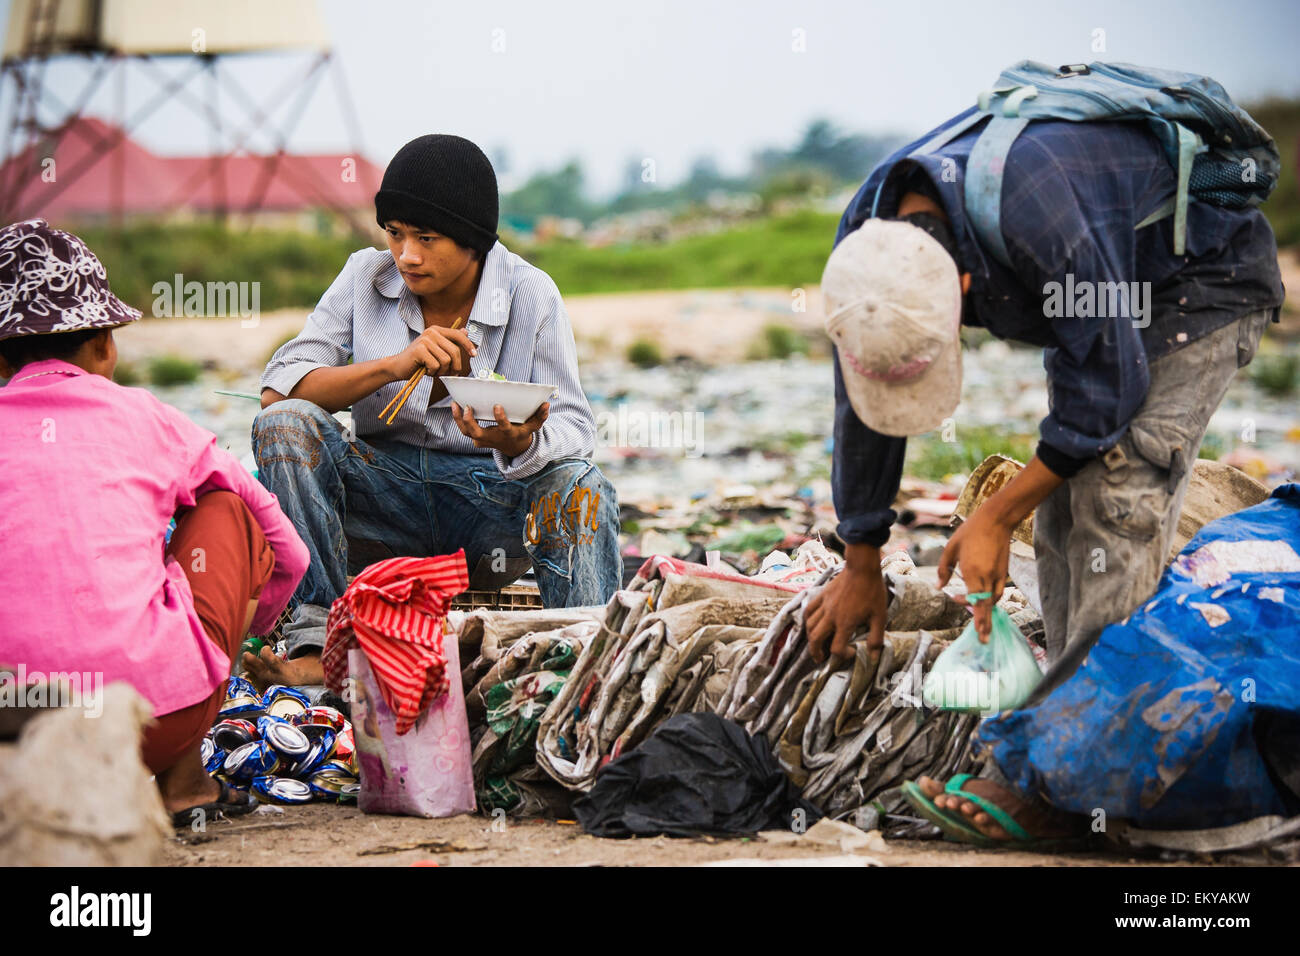 Cambodia, Men pause for meal in city trash dump; Pnhom Penh Stock Photo